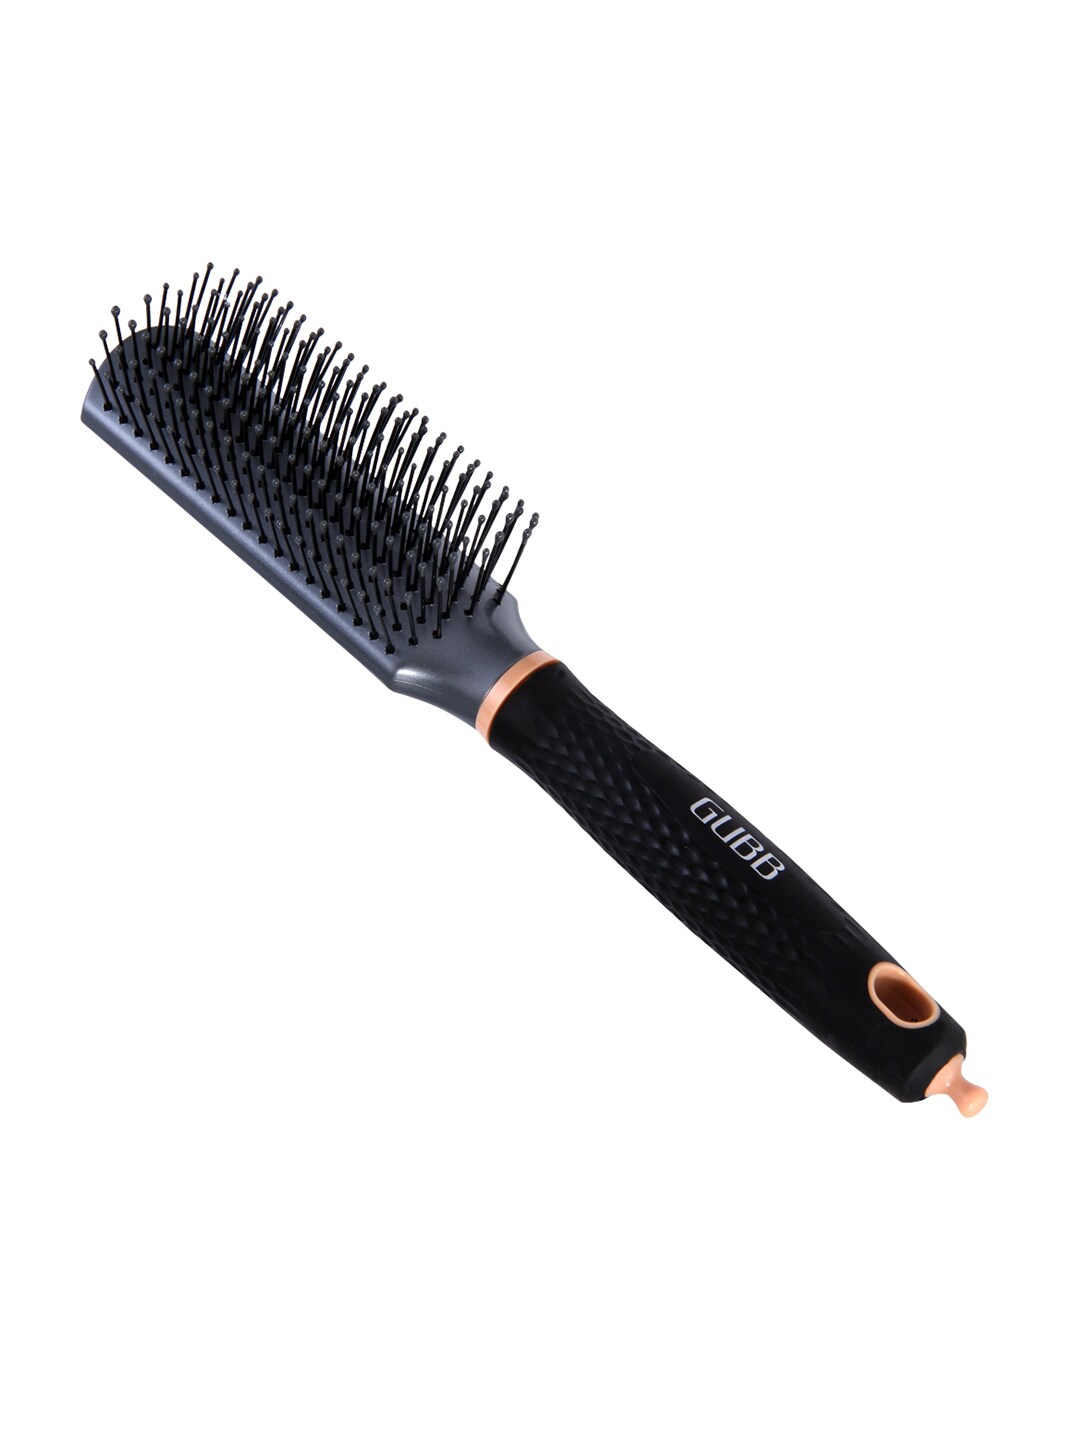 GUBB Unisex Black Elite Range Styling Hair Brush Comb With Pin Price in India